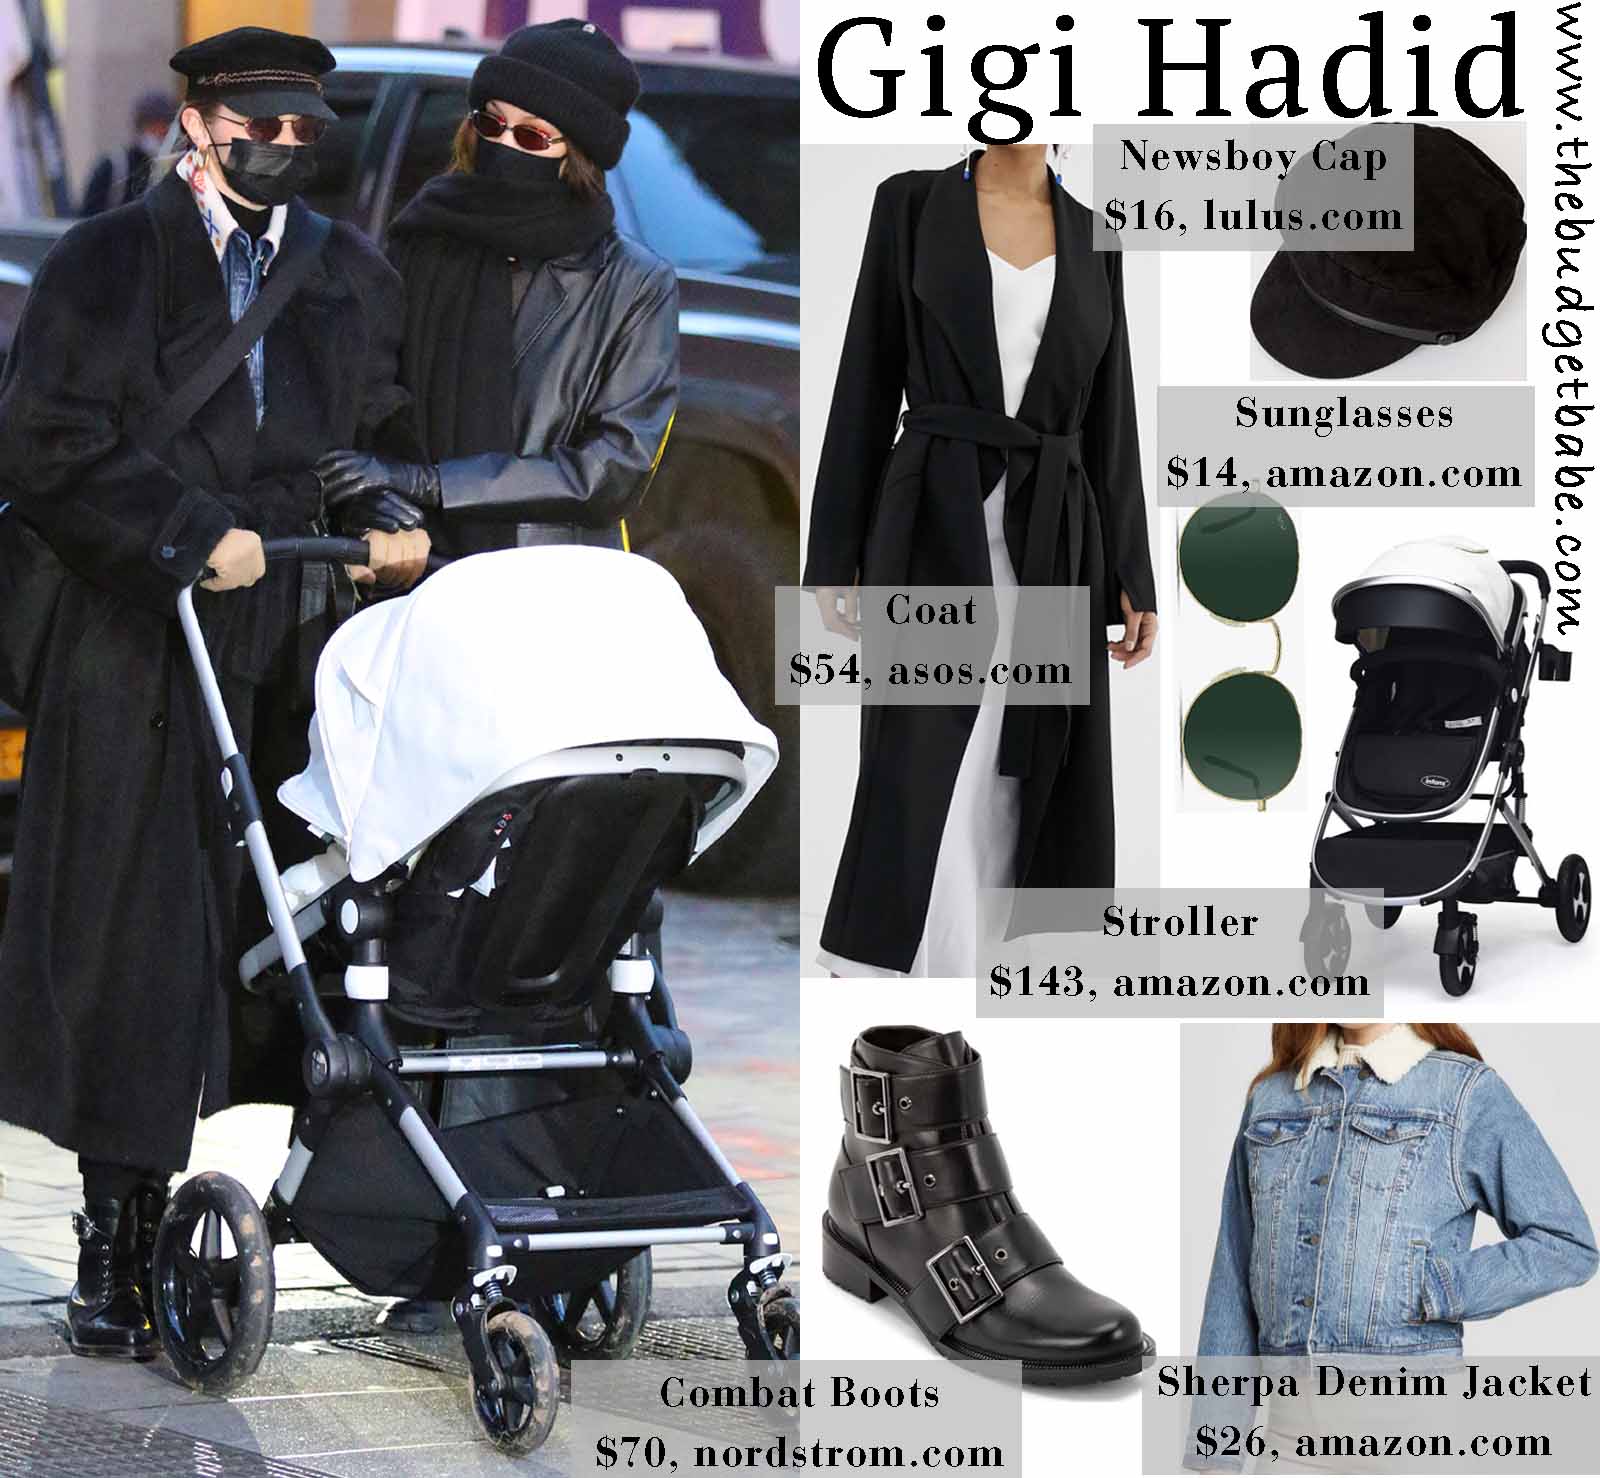 Gigi Hadid's Bugaboo stroller is so chic.